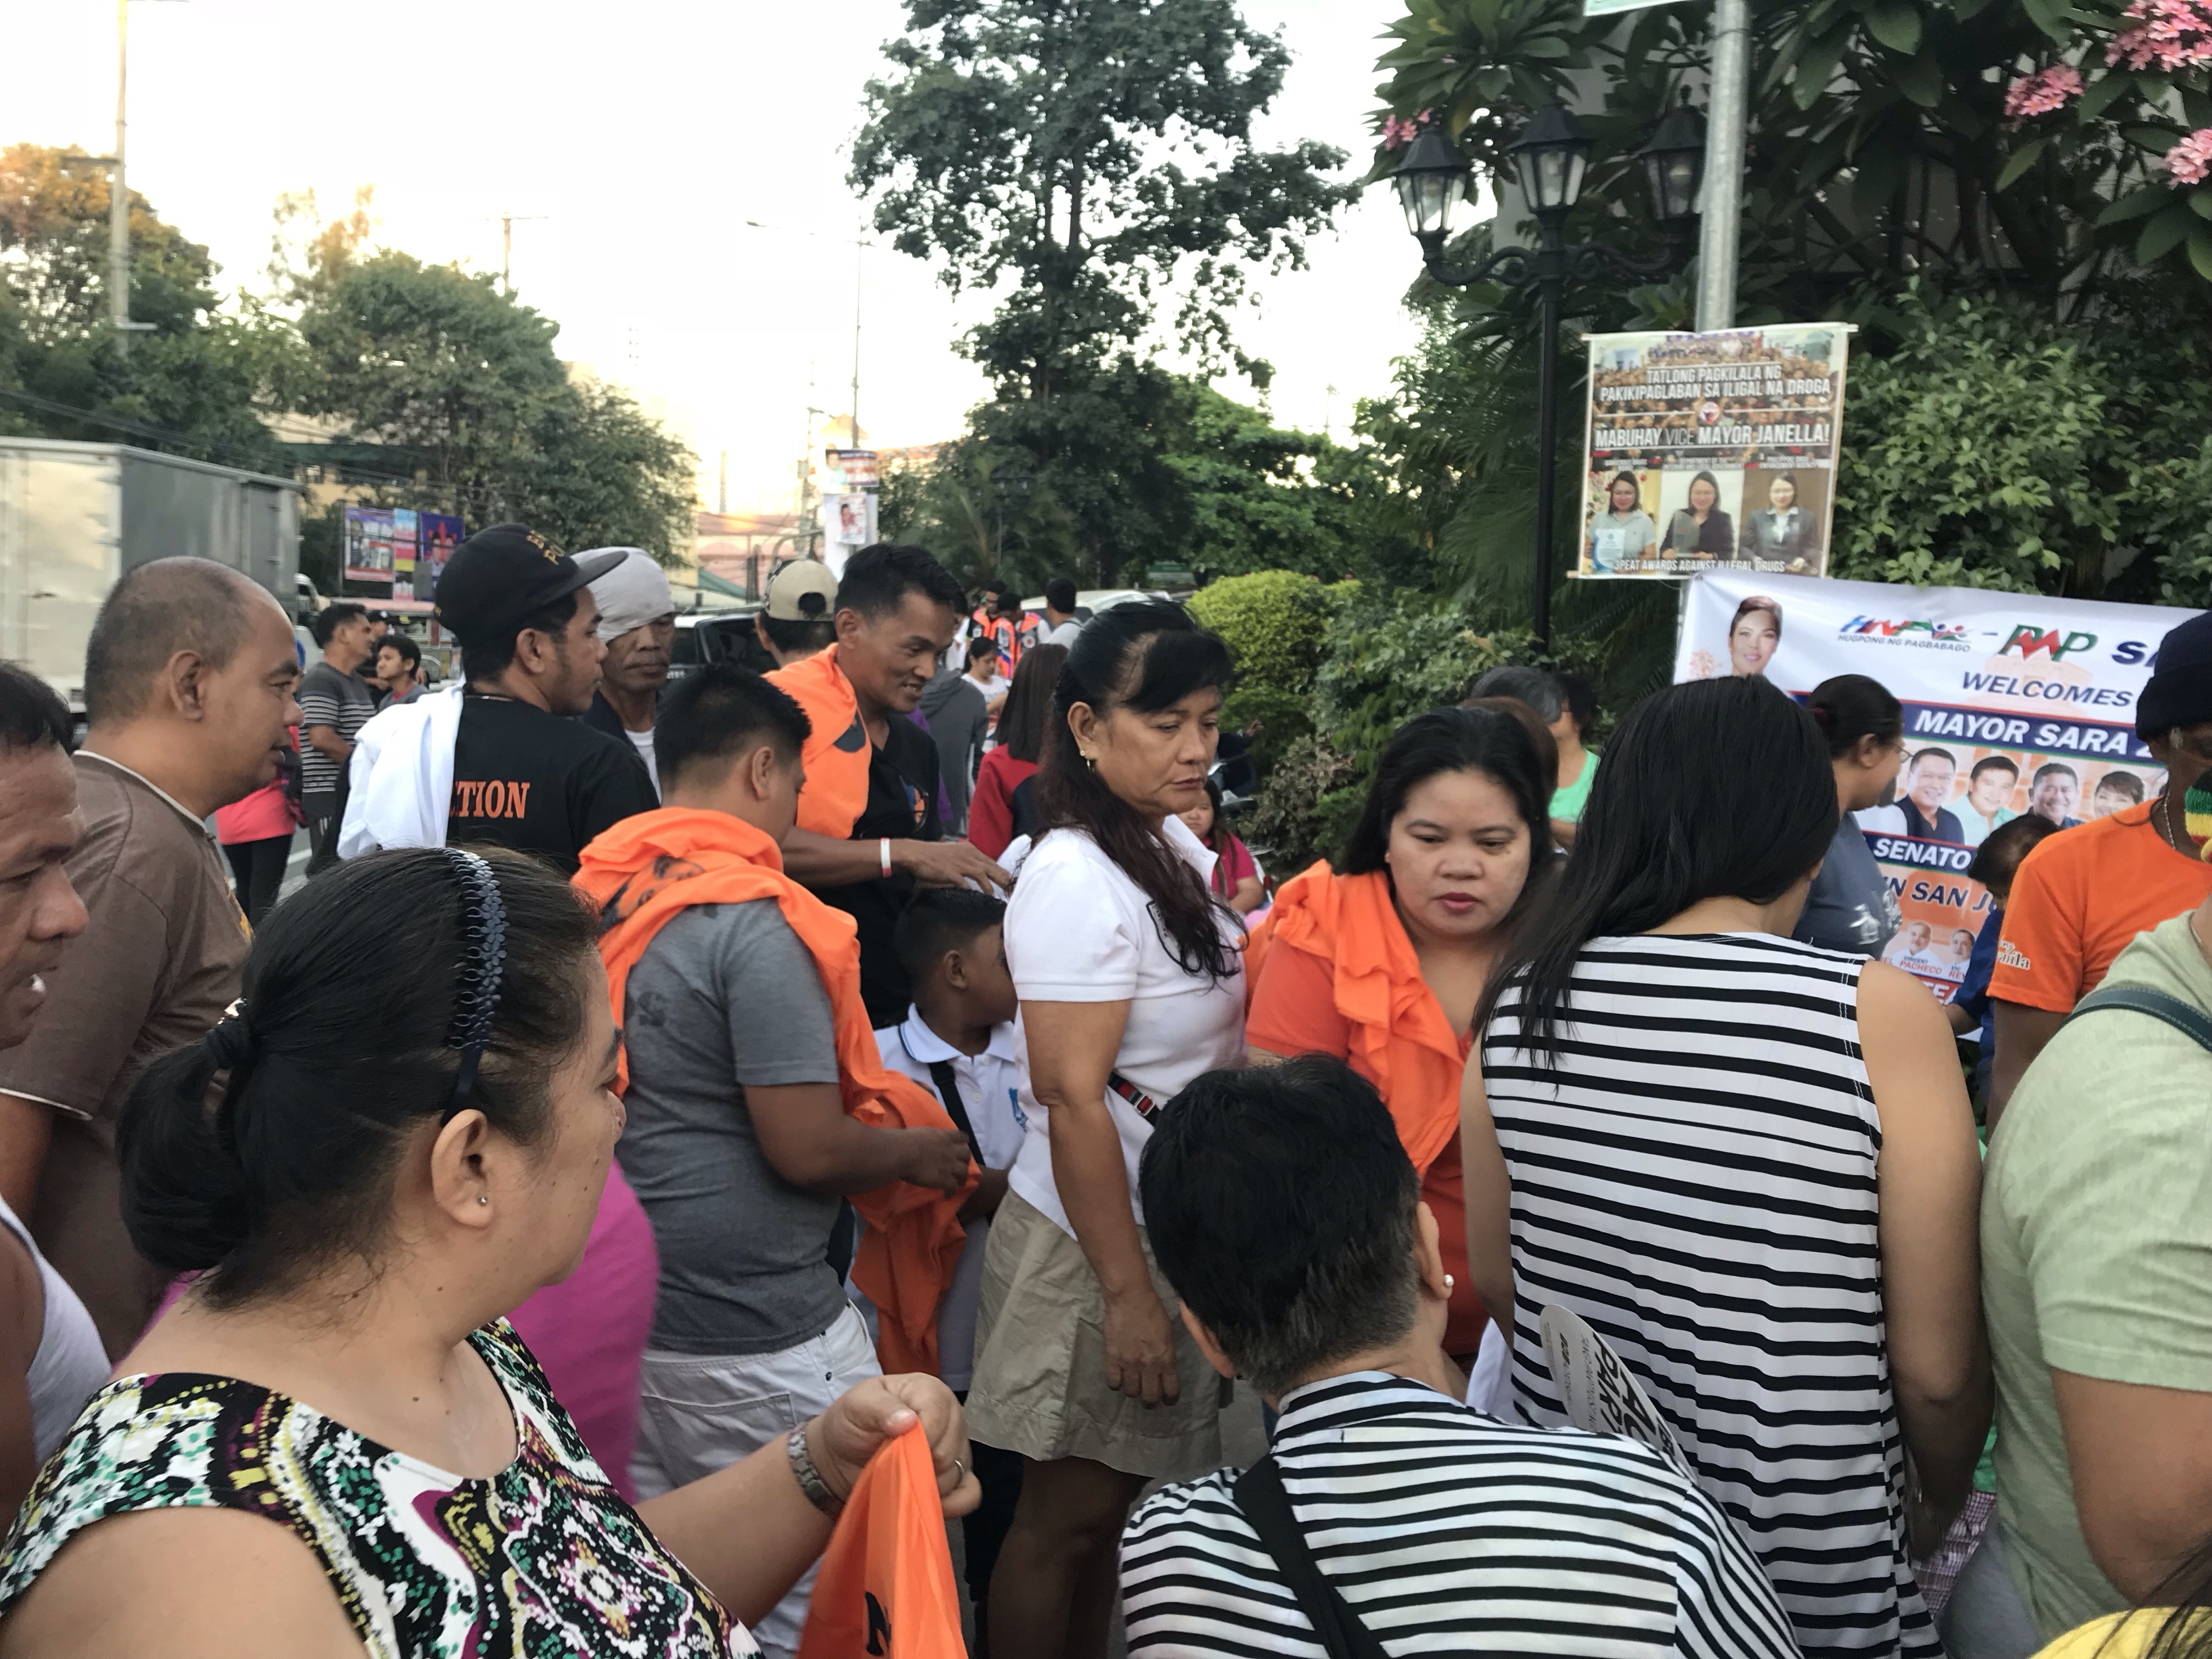 LOOK: ‘Hugpong’ supporters troop to San Juan for rally